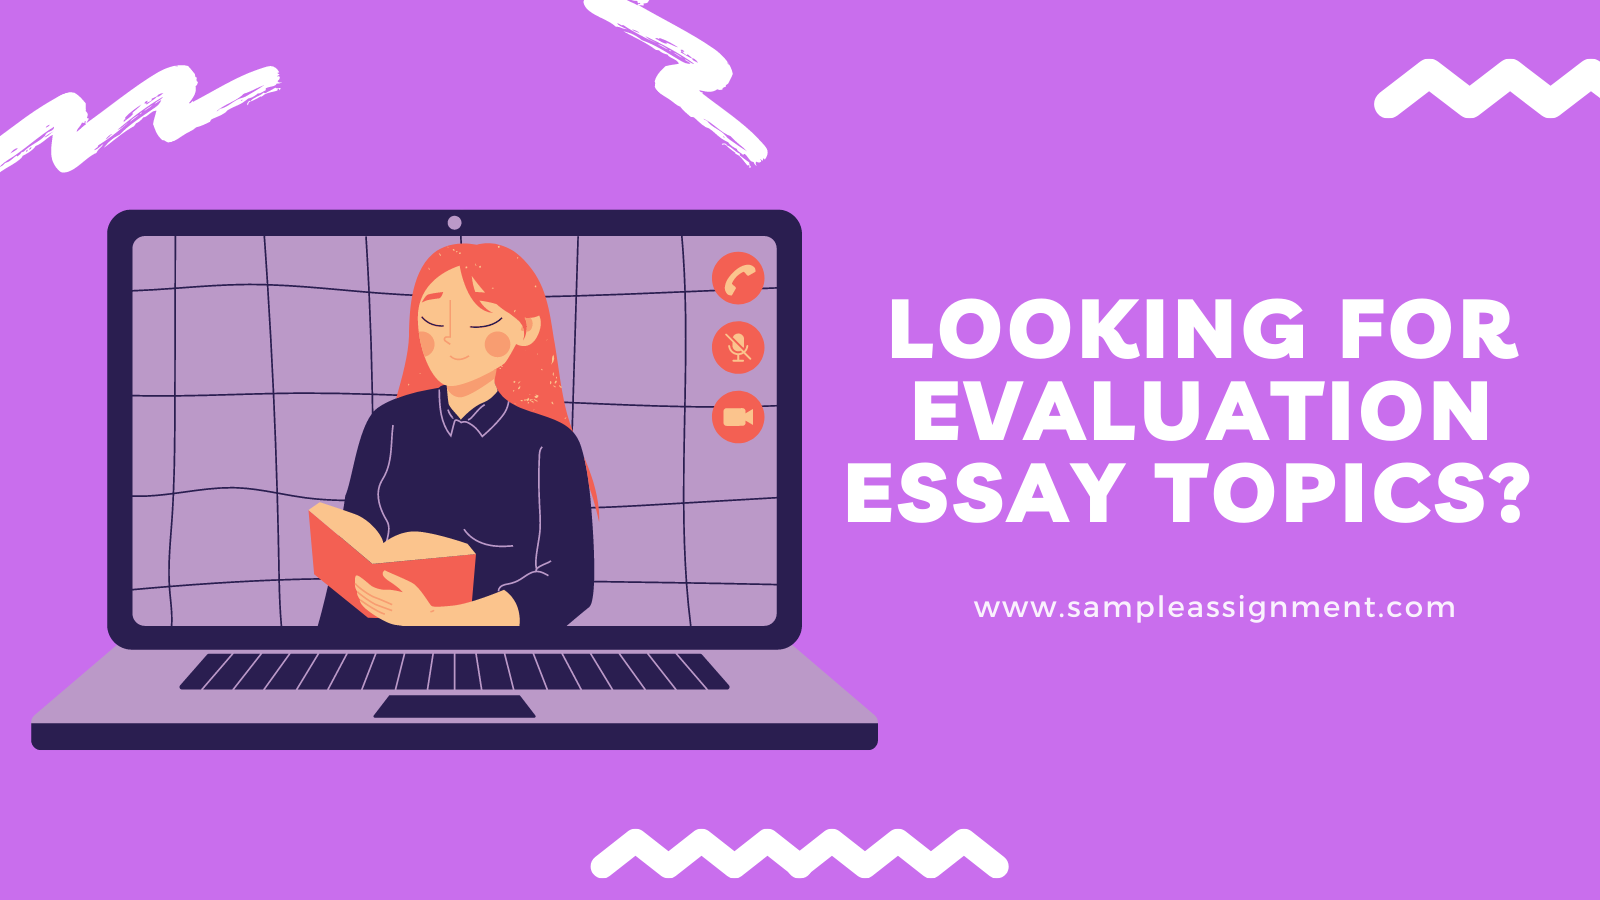 Evaluation Essay